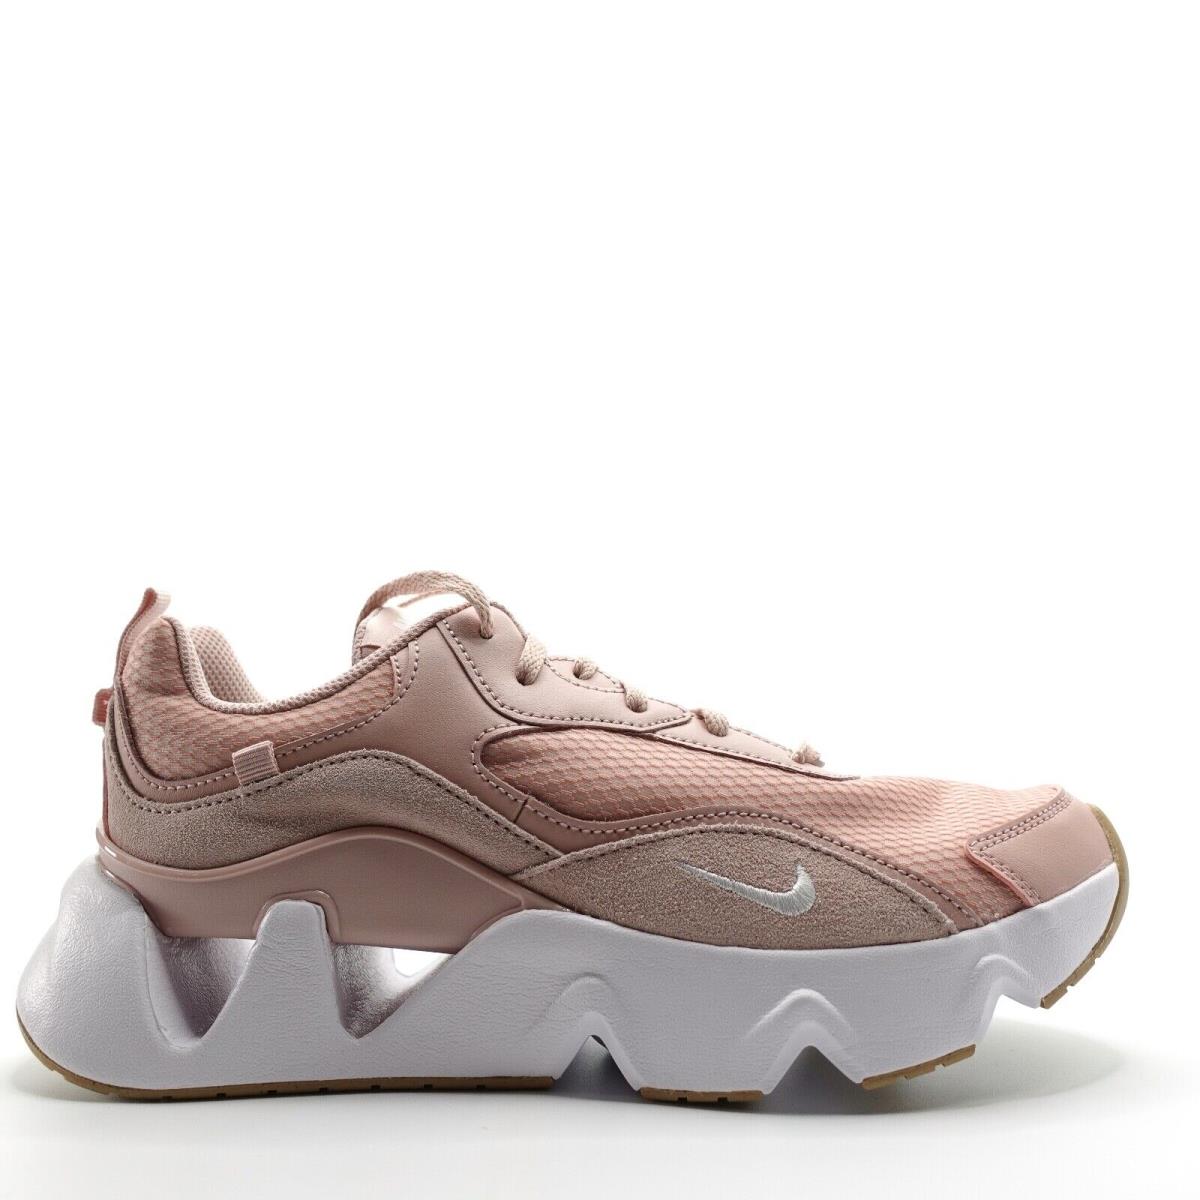 Nike Ryz 365 II Womens Sneakers Size 9.5 Pink White CU4874 600